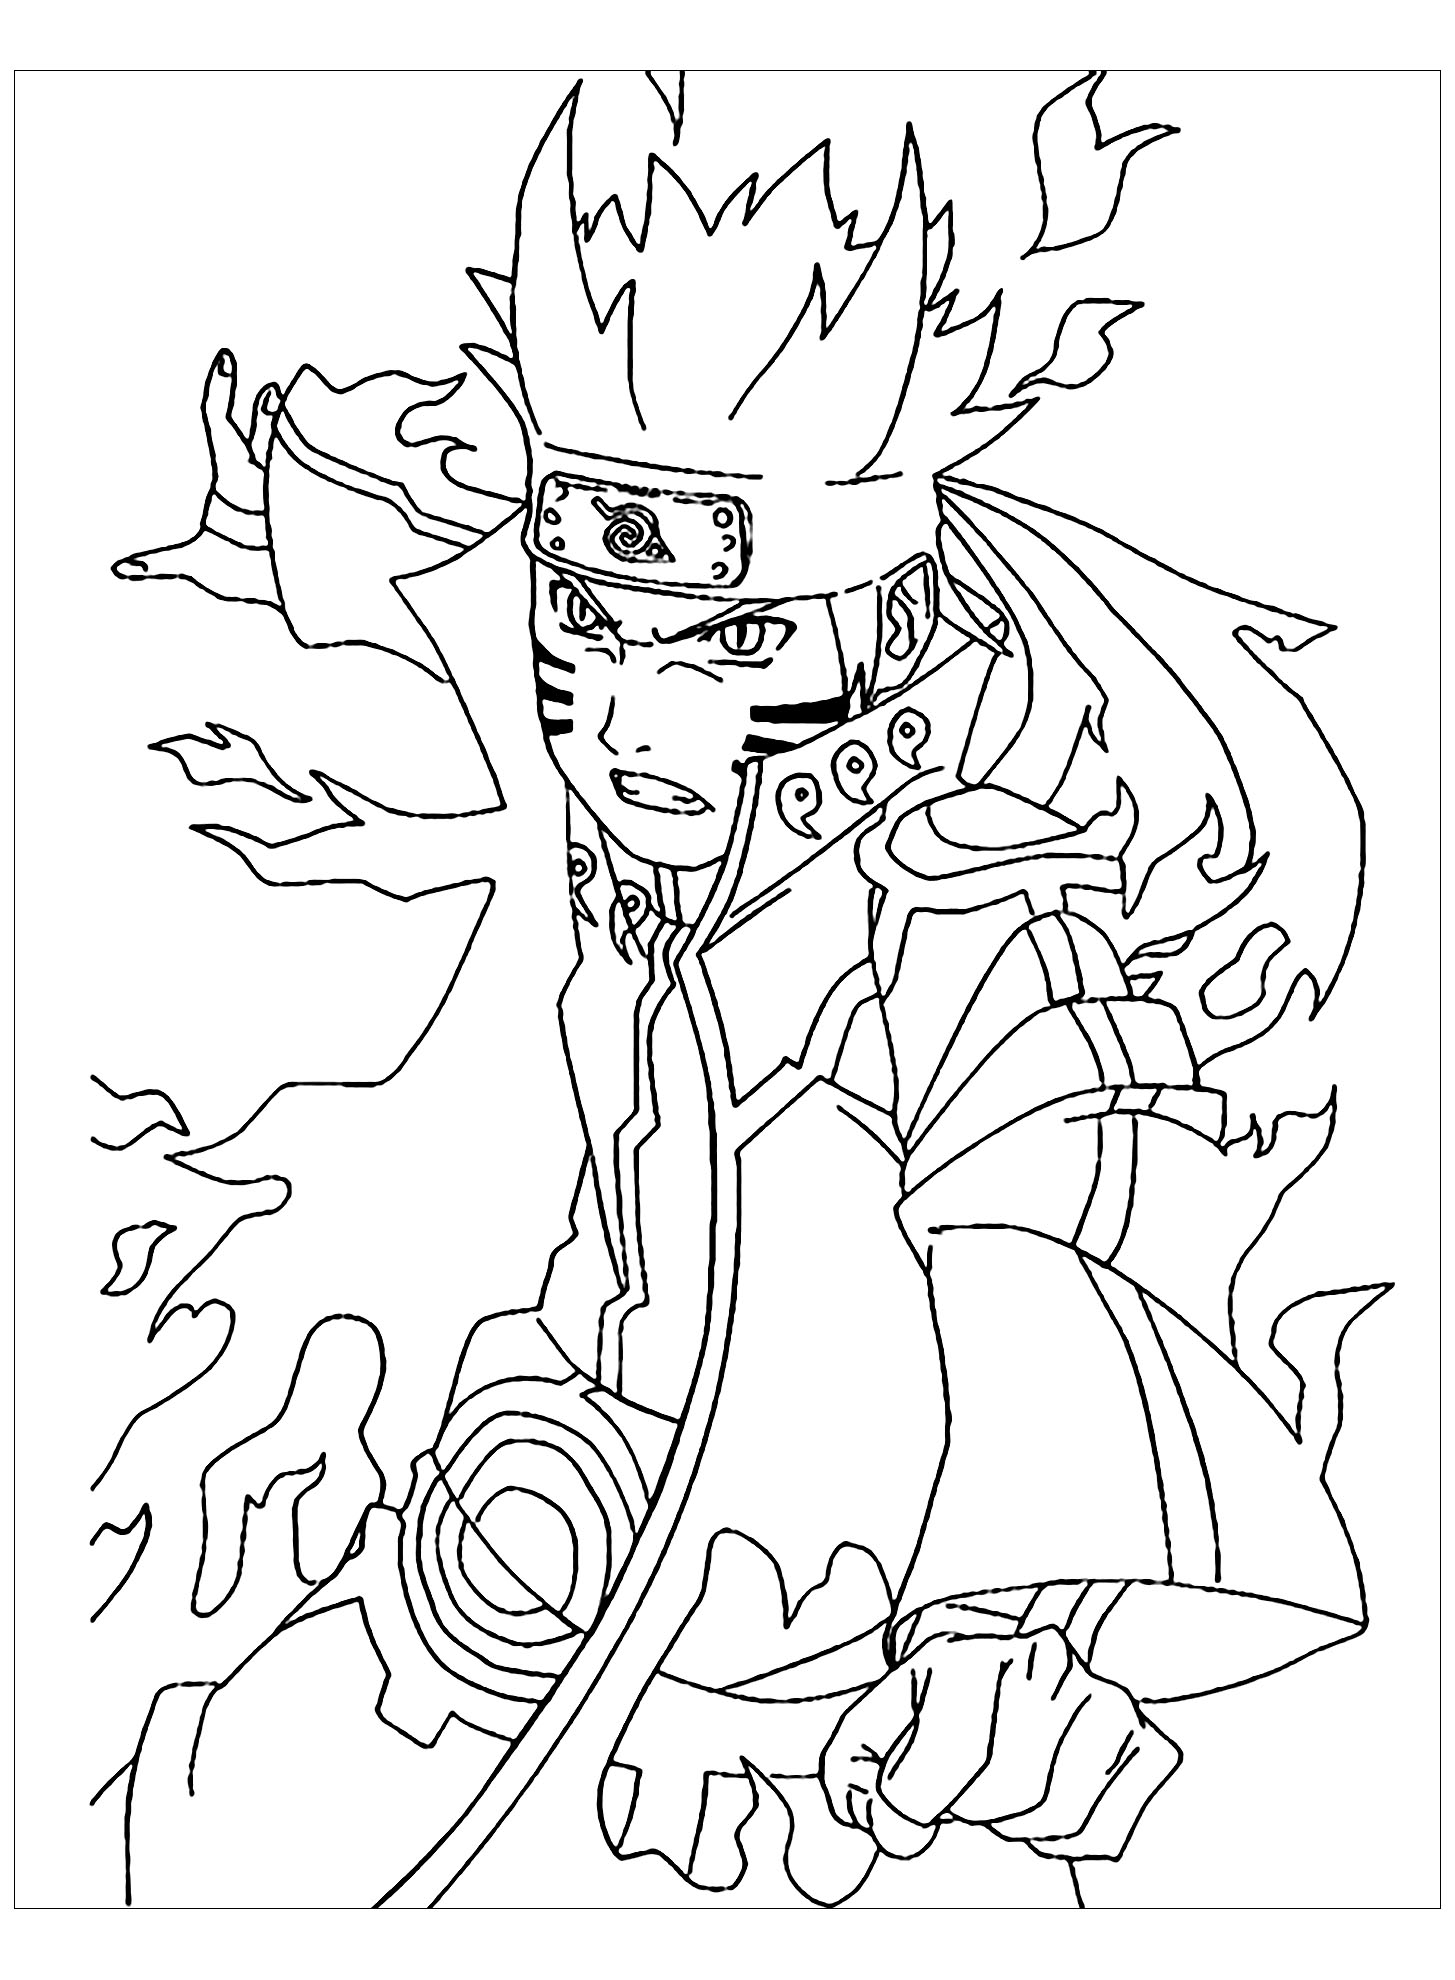 Desenhos para colorir do Naruto  Naruto desenho, Desenhos, Desenhos para  colorir naruto